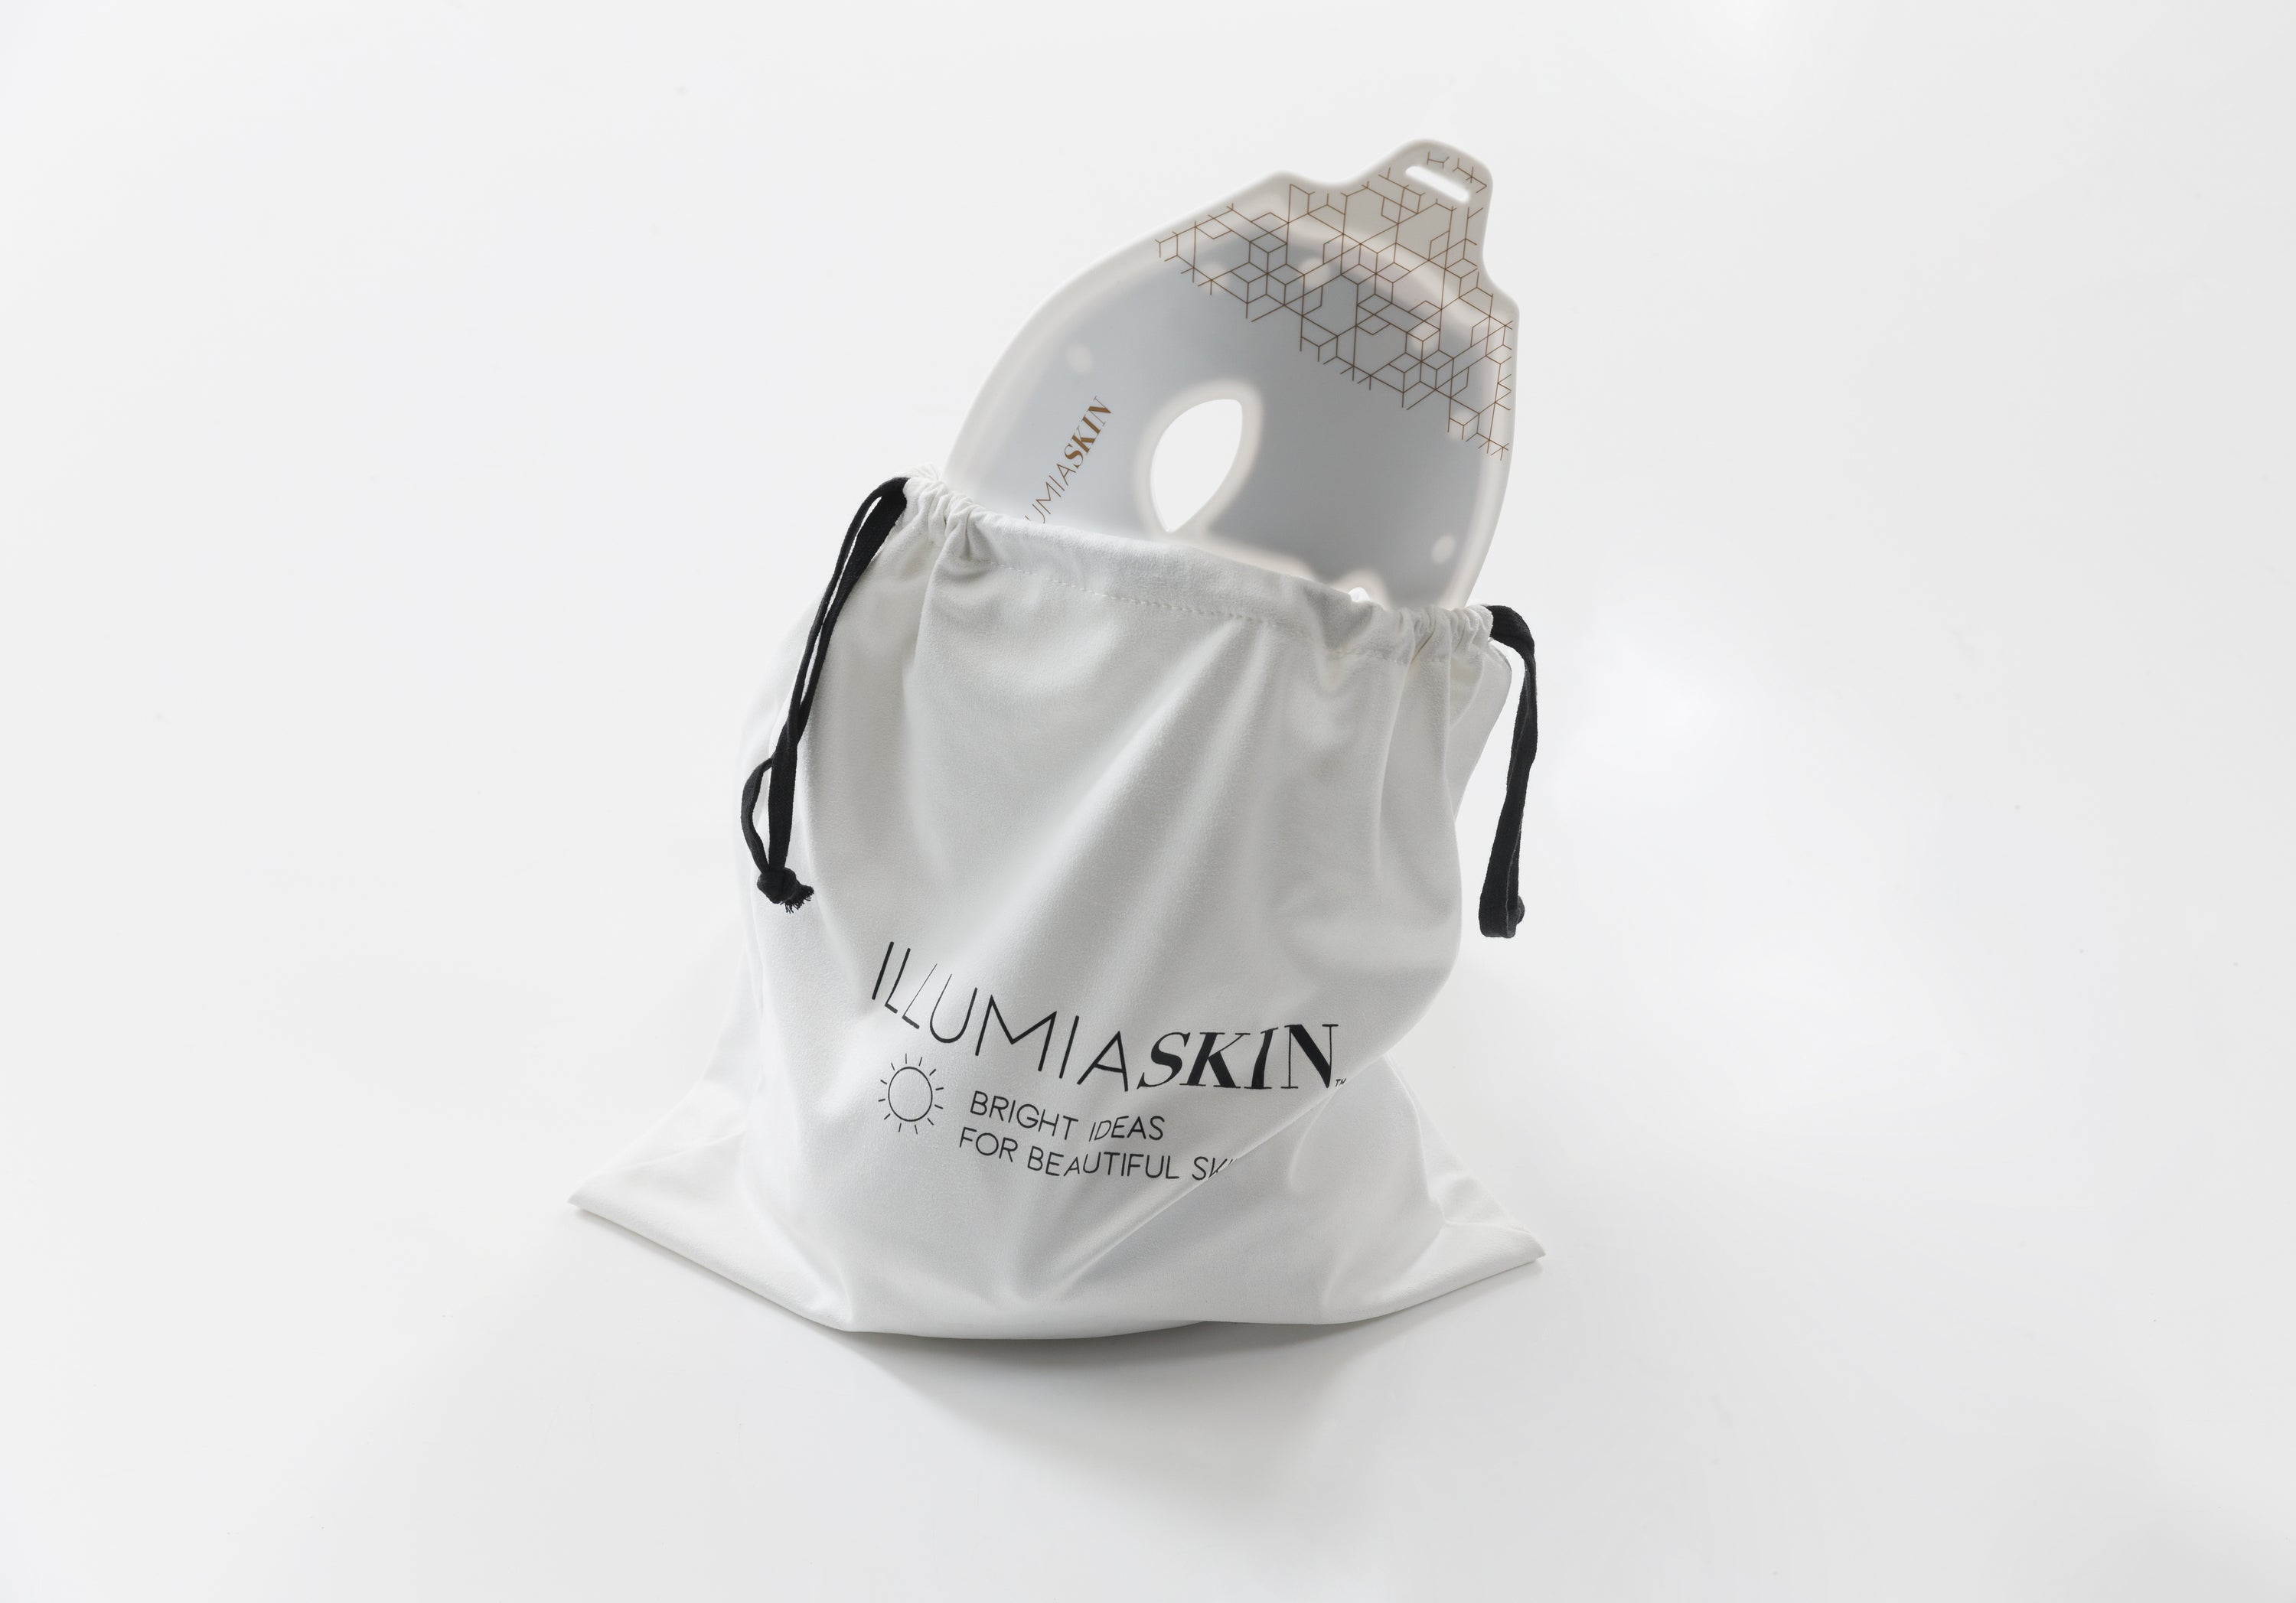 Dust bag for luxury handbag brand | The Bag Workshop